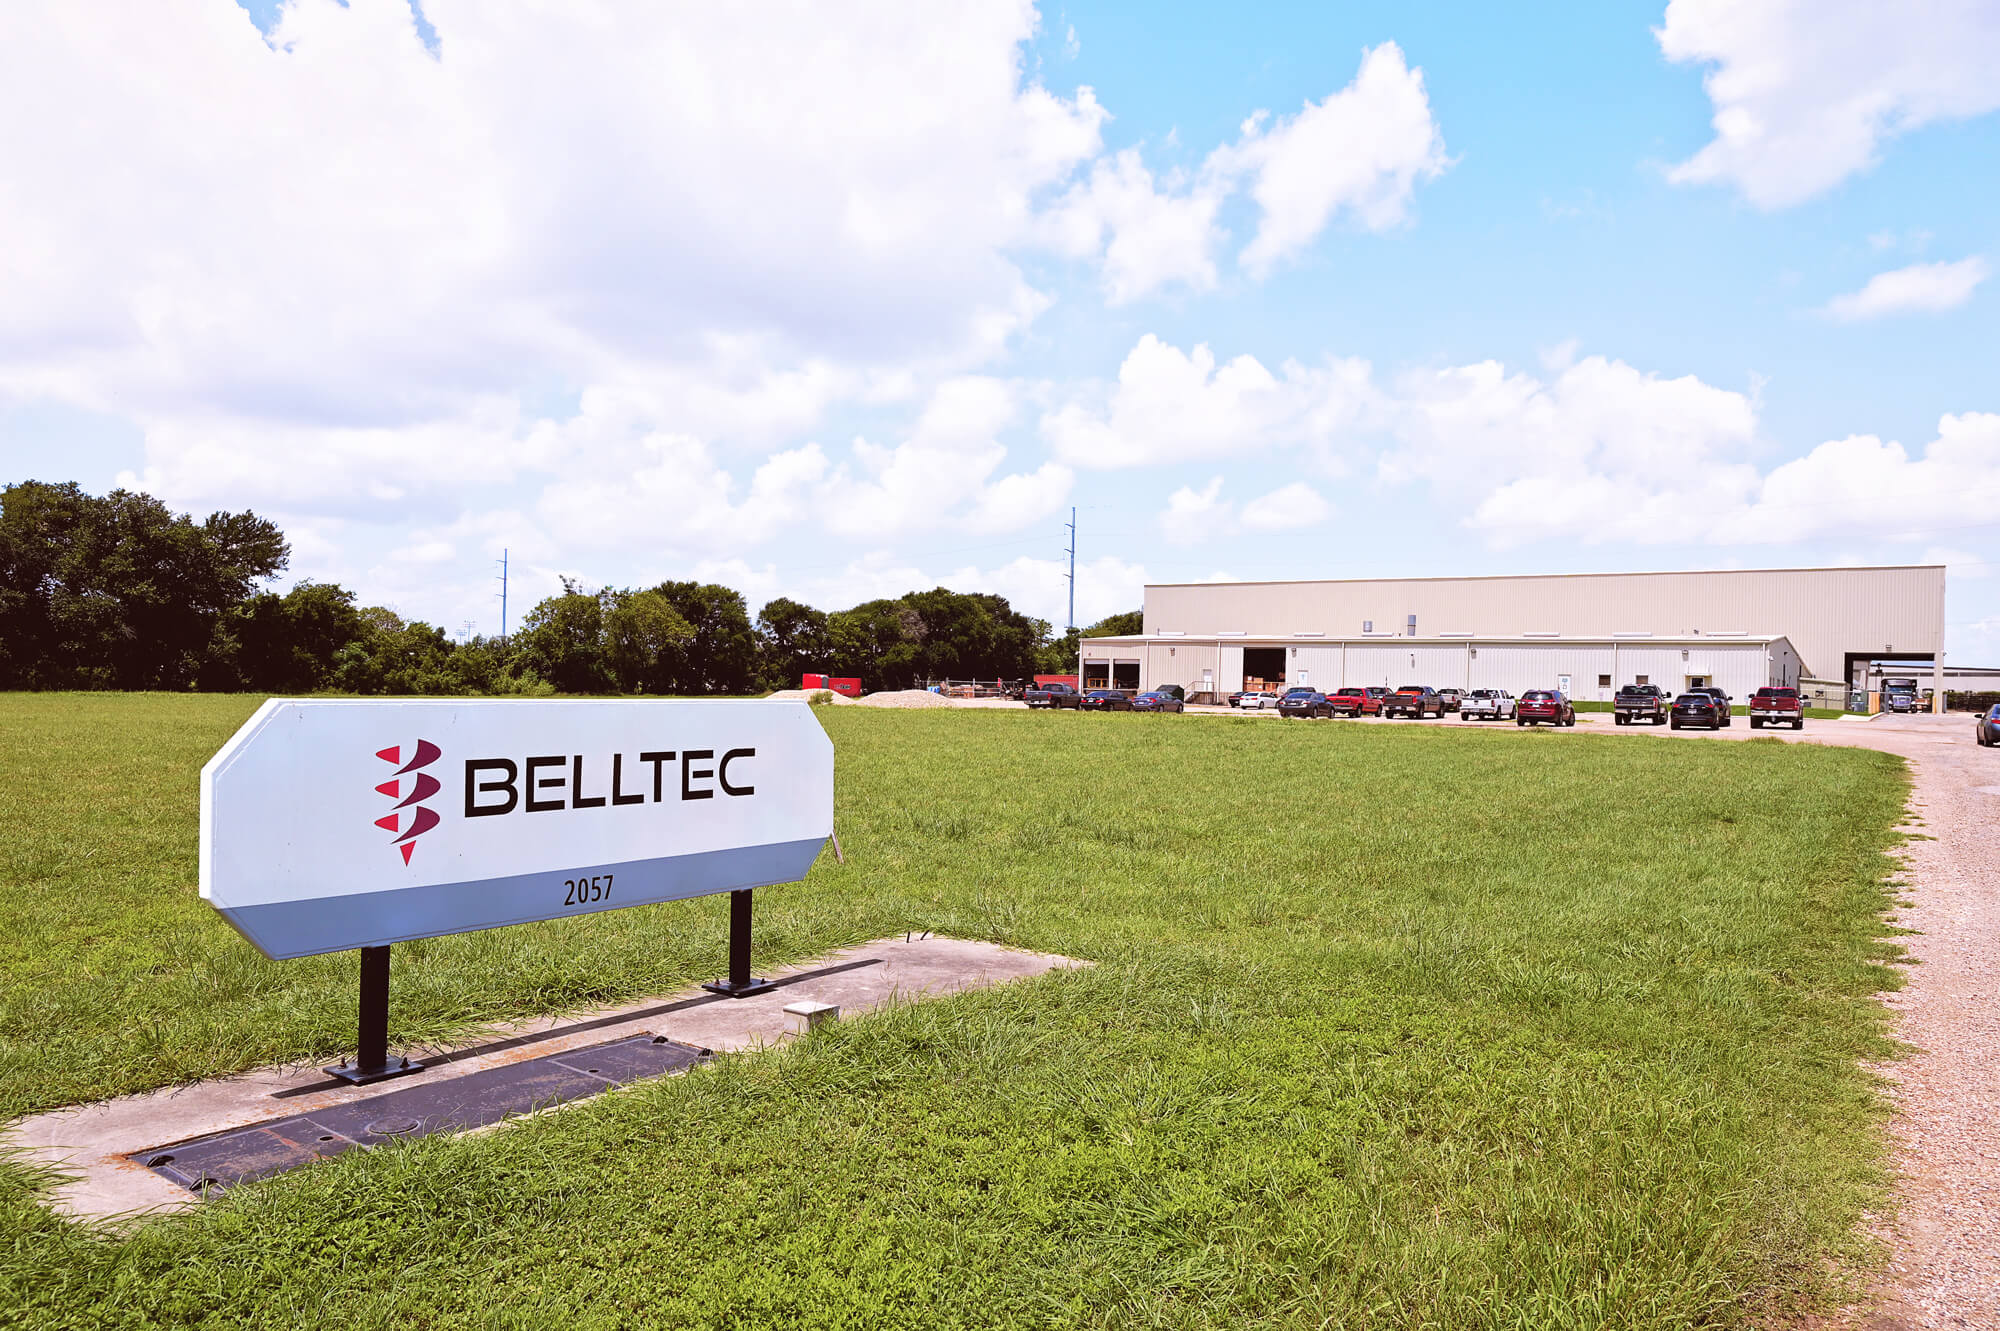 Belltec headquarters in Belton, Texas